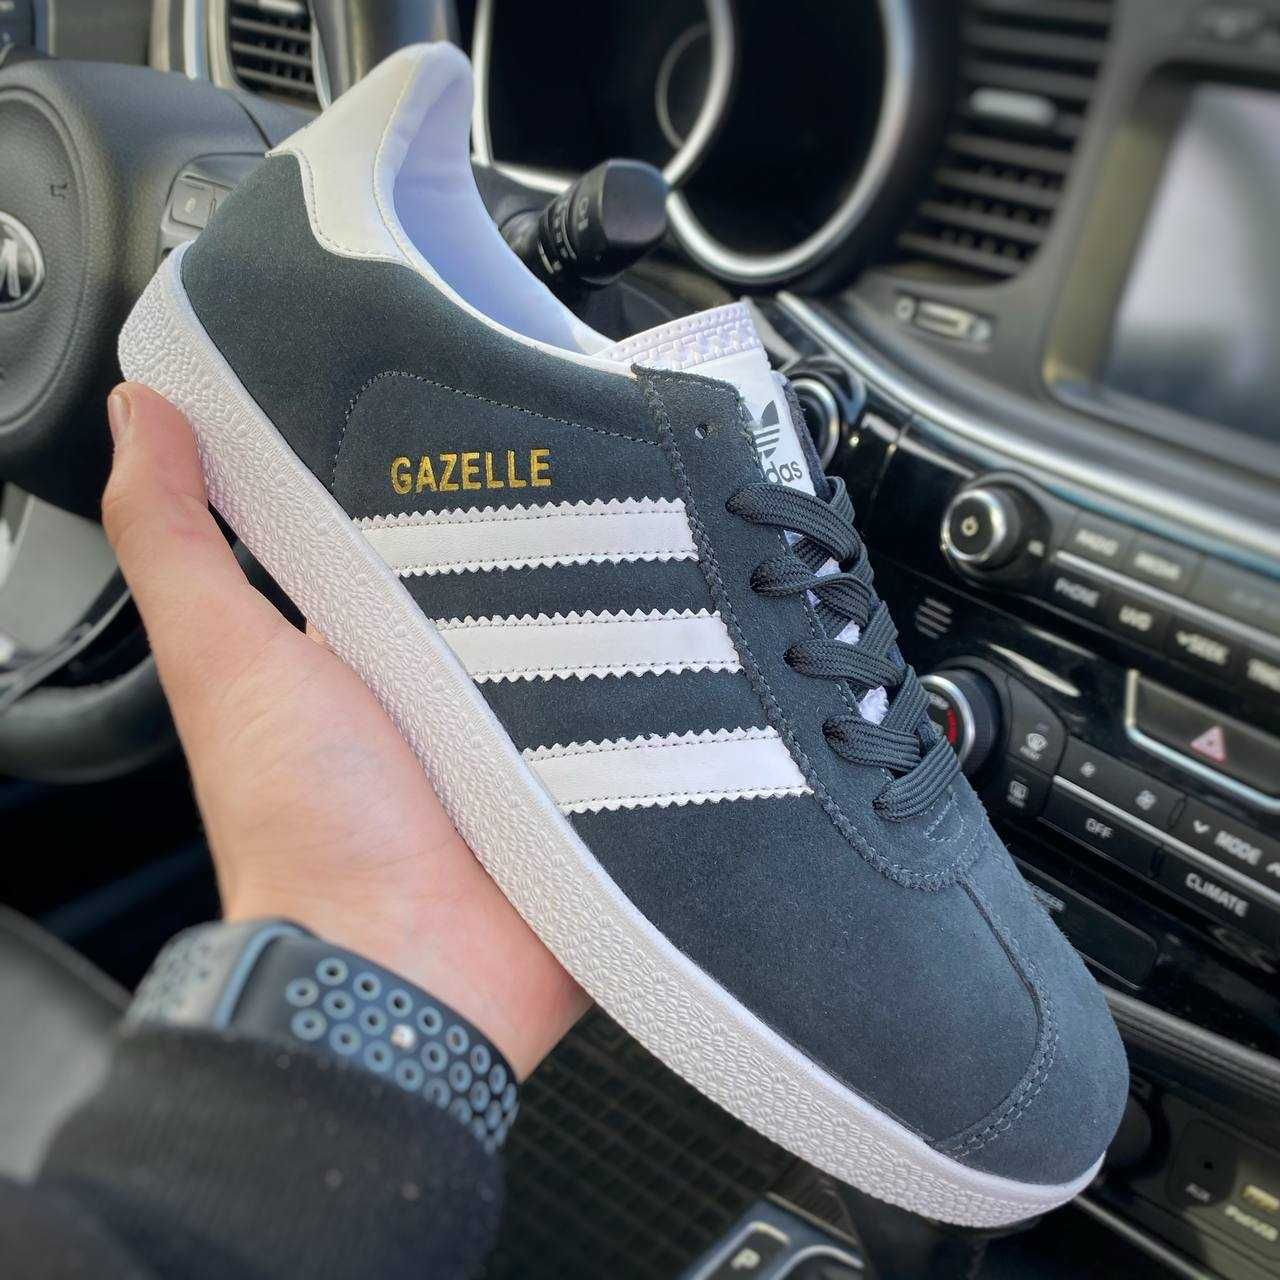 Adidas Gazelle_більше фото у Instagram cros_homeua